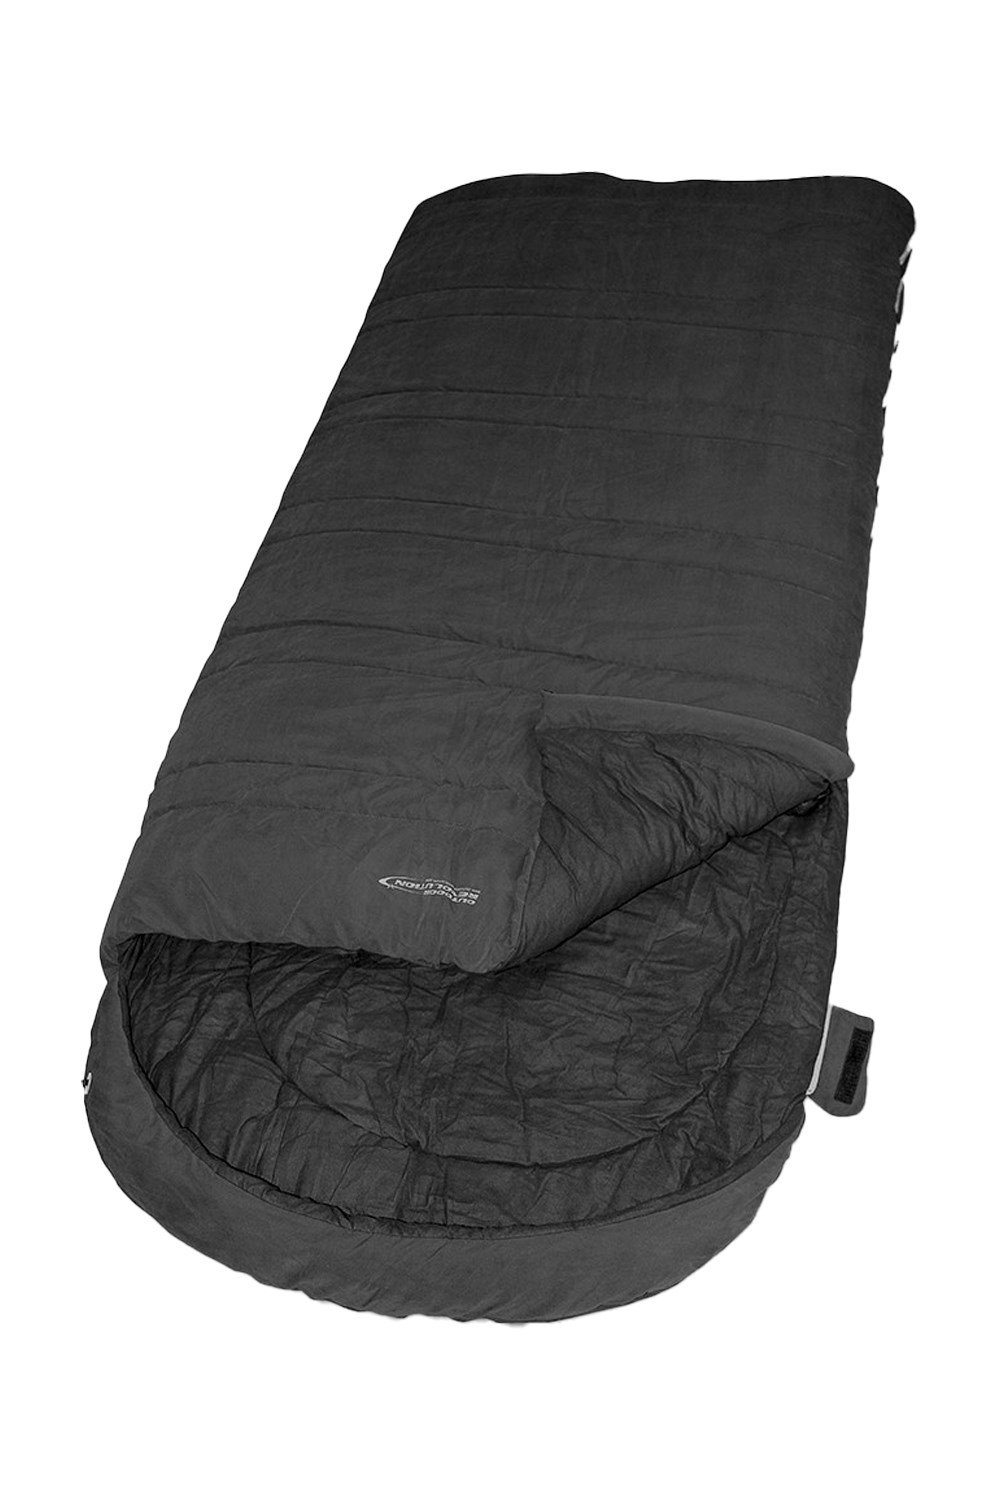 Star Fall Midi 400 Dl Sleeping Bag W/ Pillow Case -